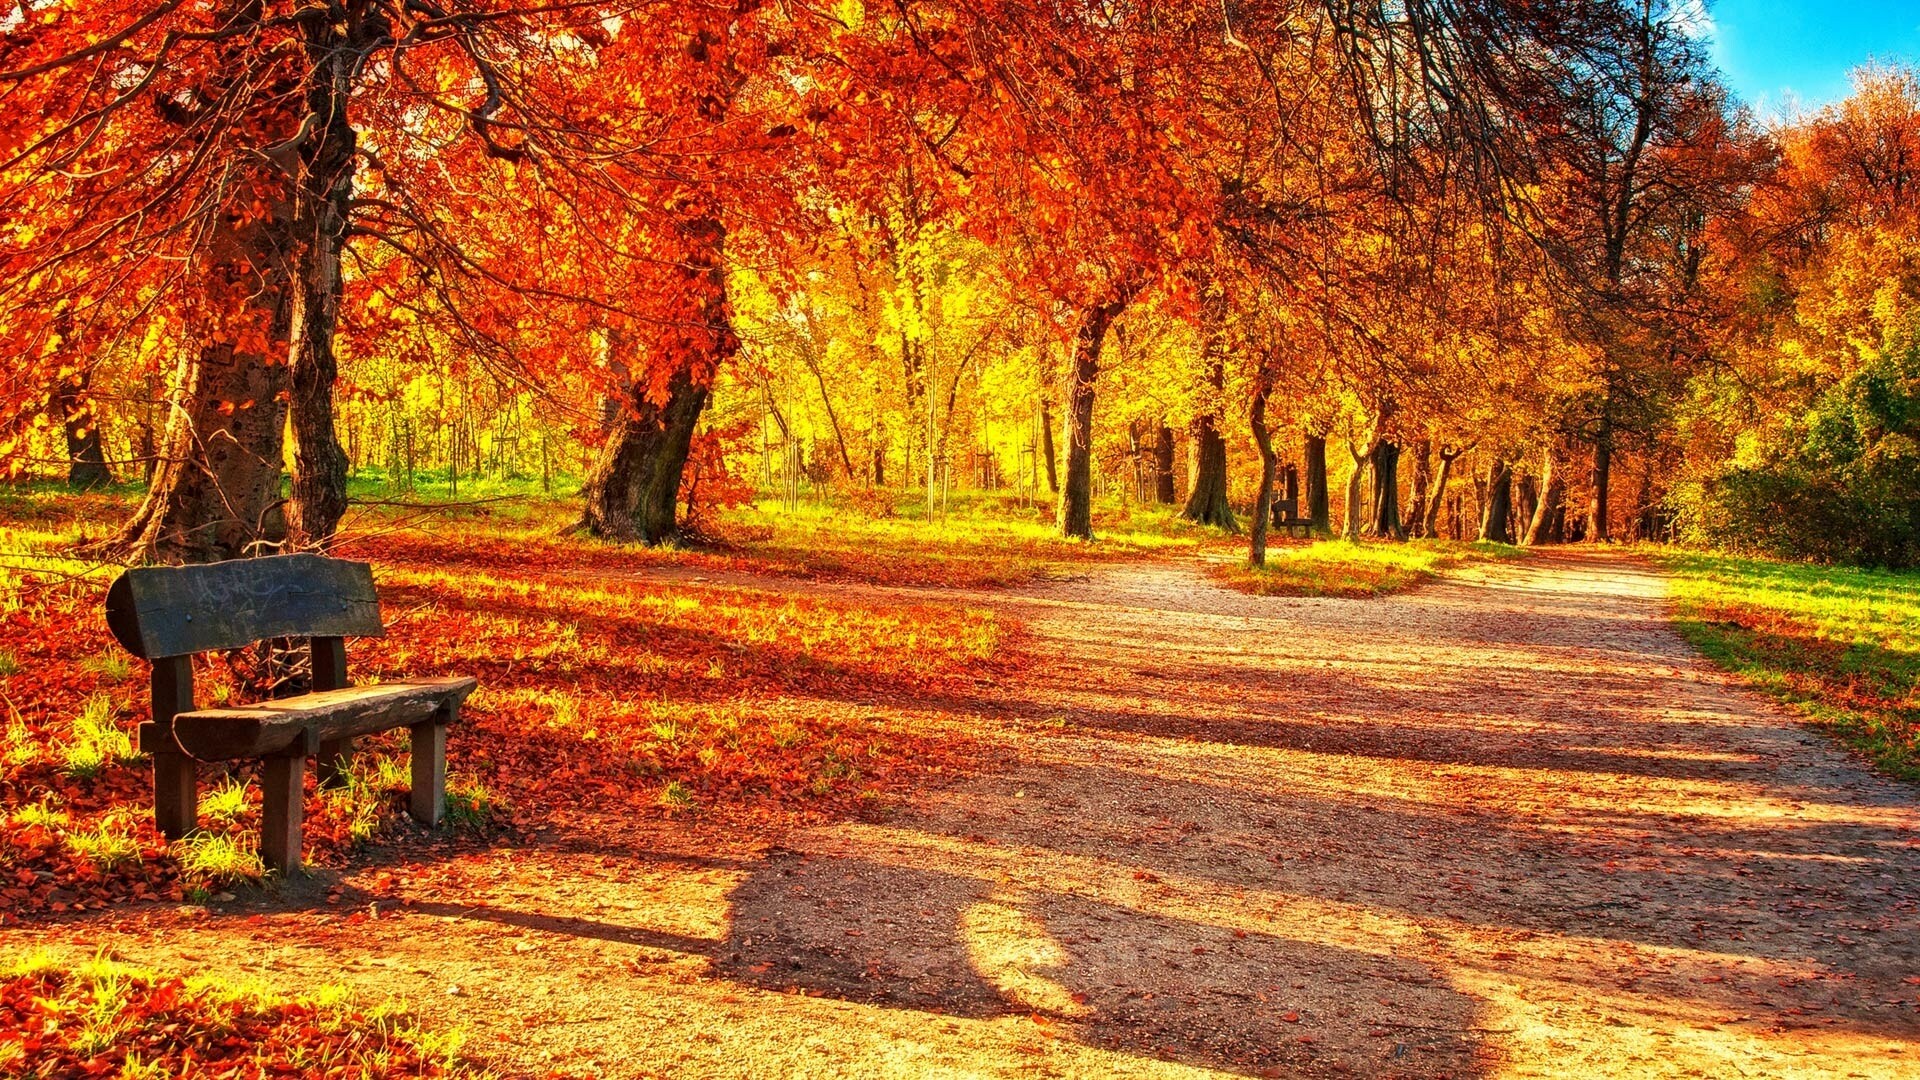 Autumn: Fall foliage, A catabolic process of foliage senescence. 1920x1080 Full HD Background.